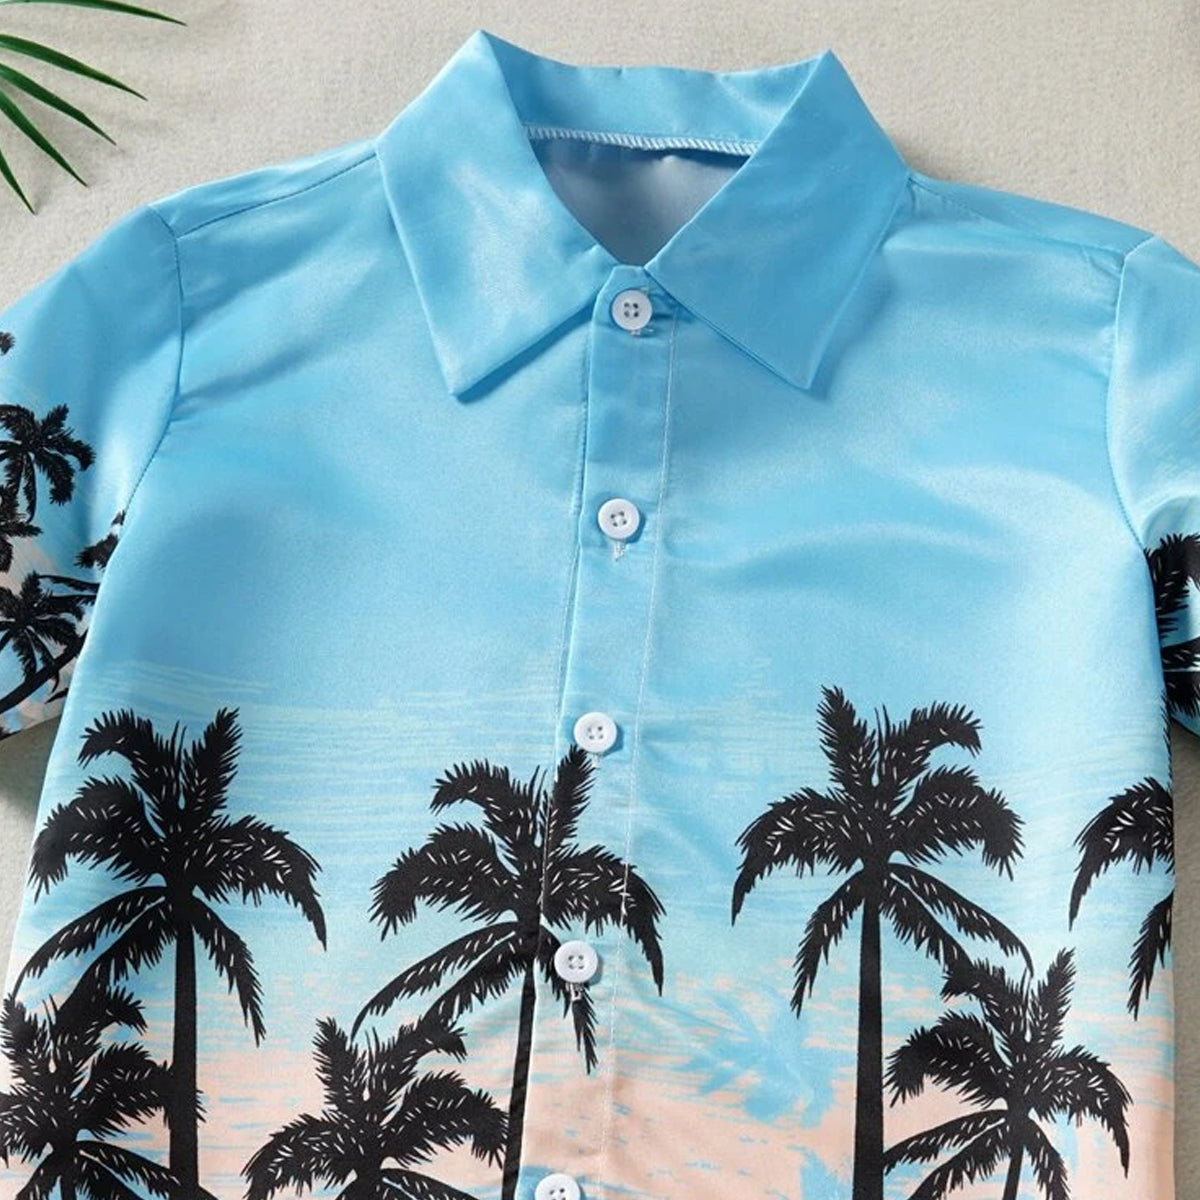 Venutaloza Tropical Casual Tree Button Front Beach Short Sleeve Shirt For Boys.